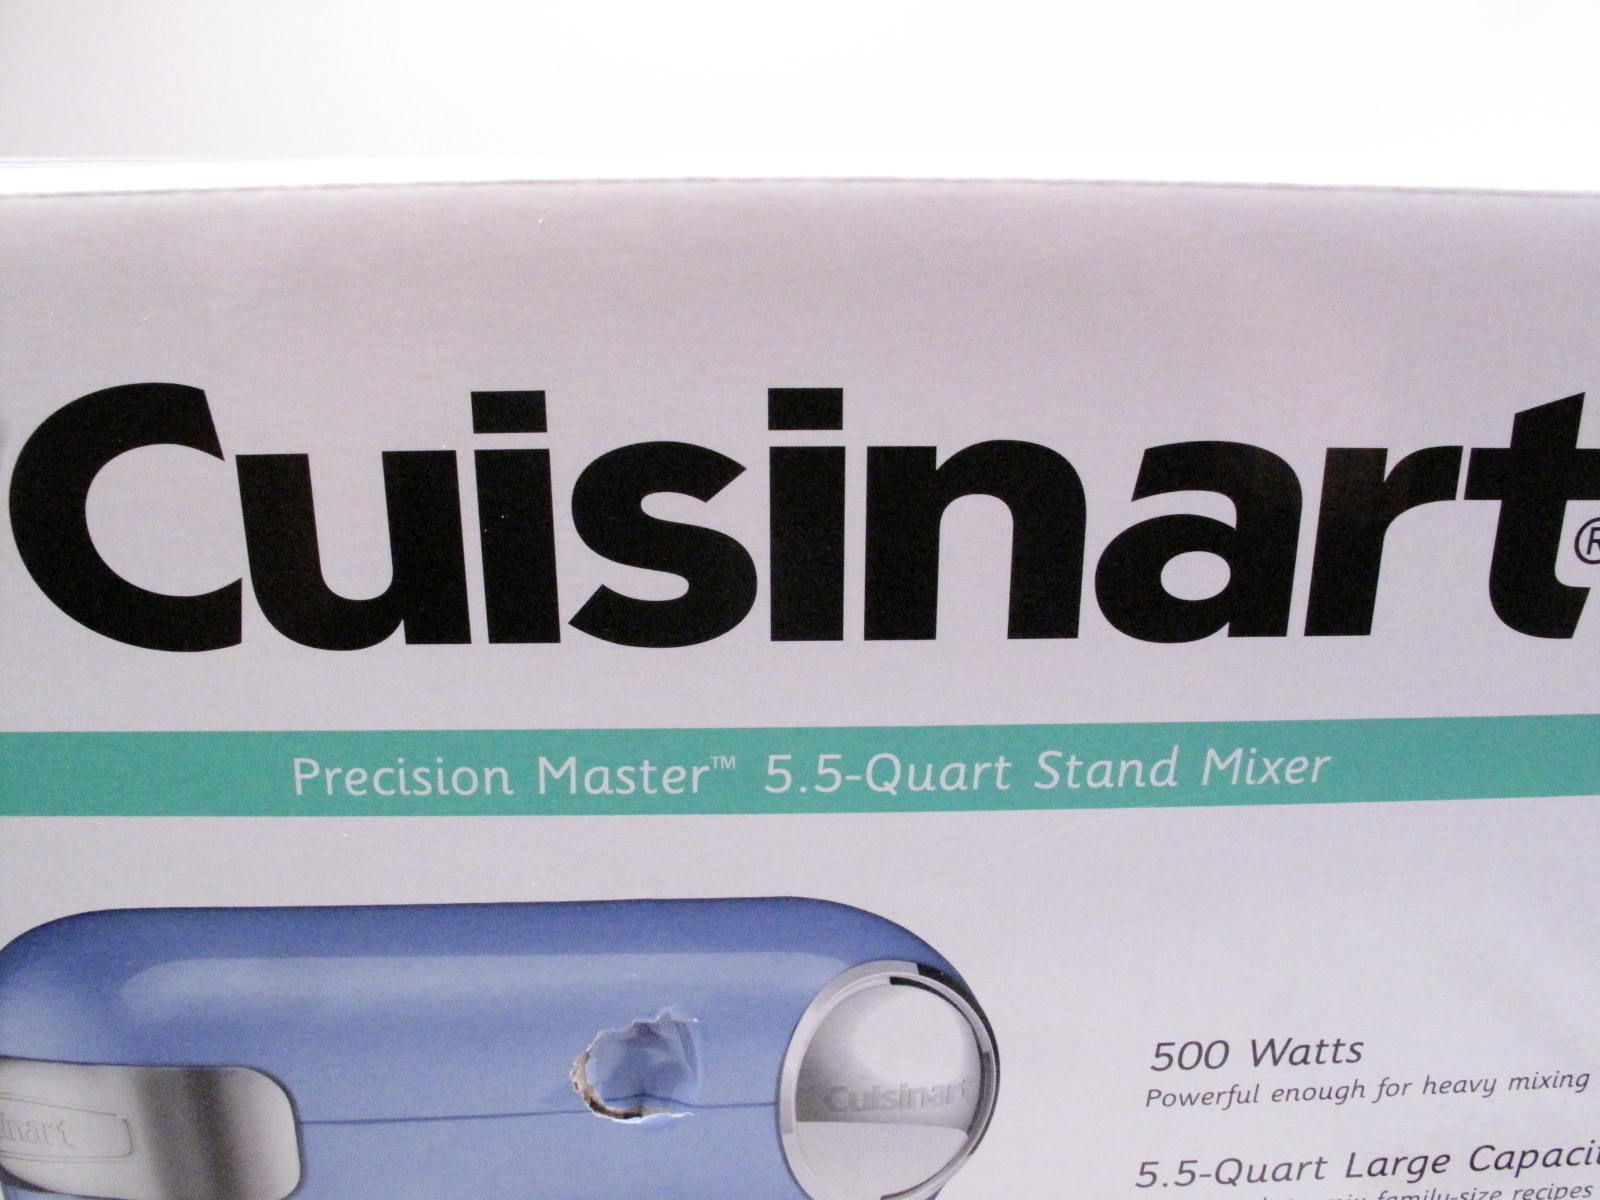 SM50BL by Cuisinart - Precision Master 5.5-Quart Stand Mixer